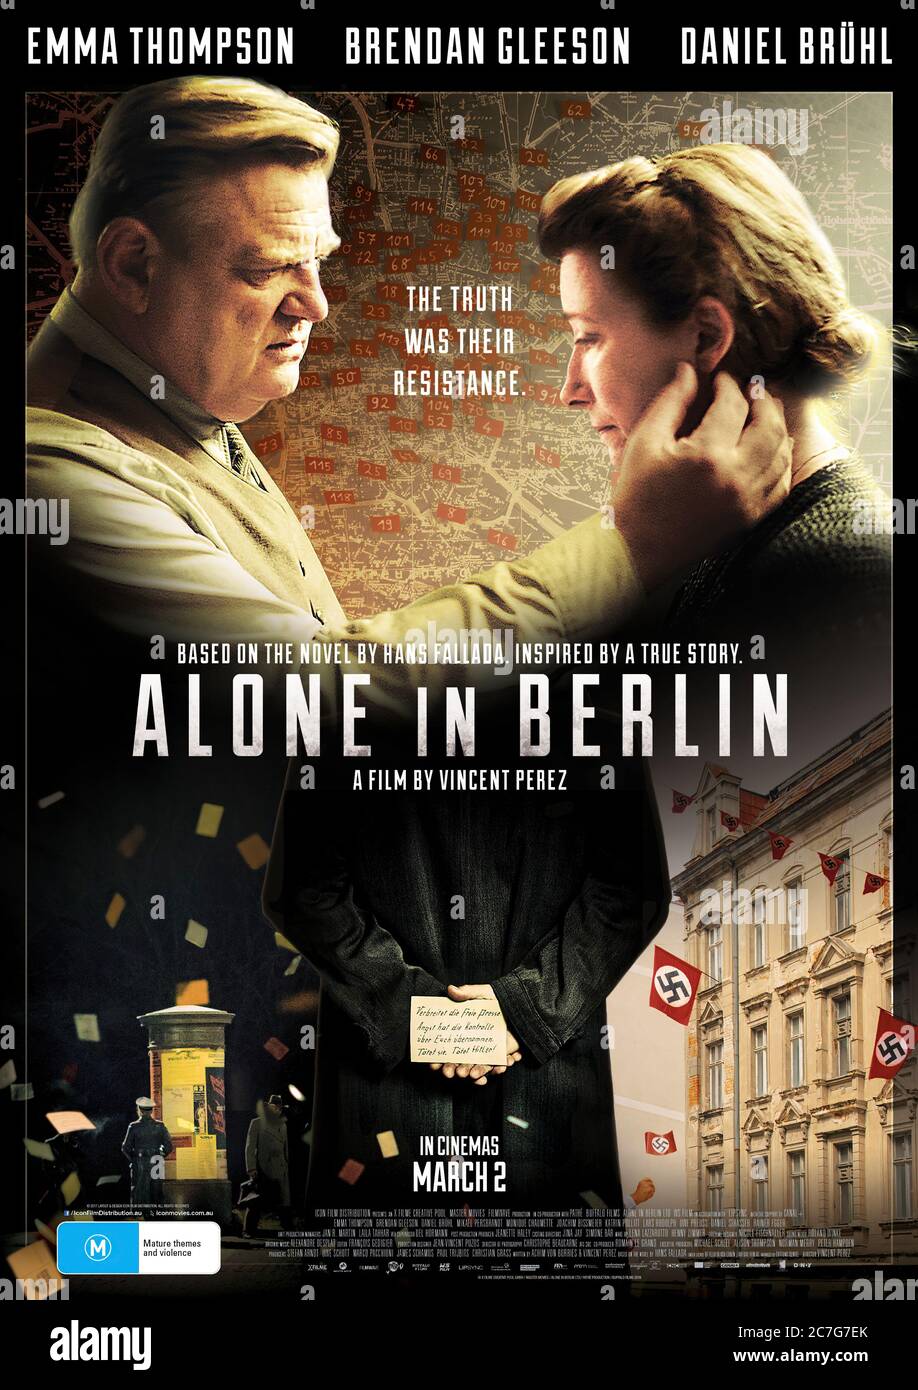 Alone in Berlin - Movie Poster Stock Photo